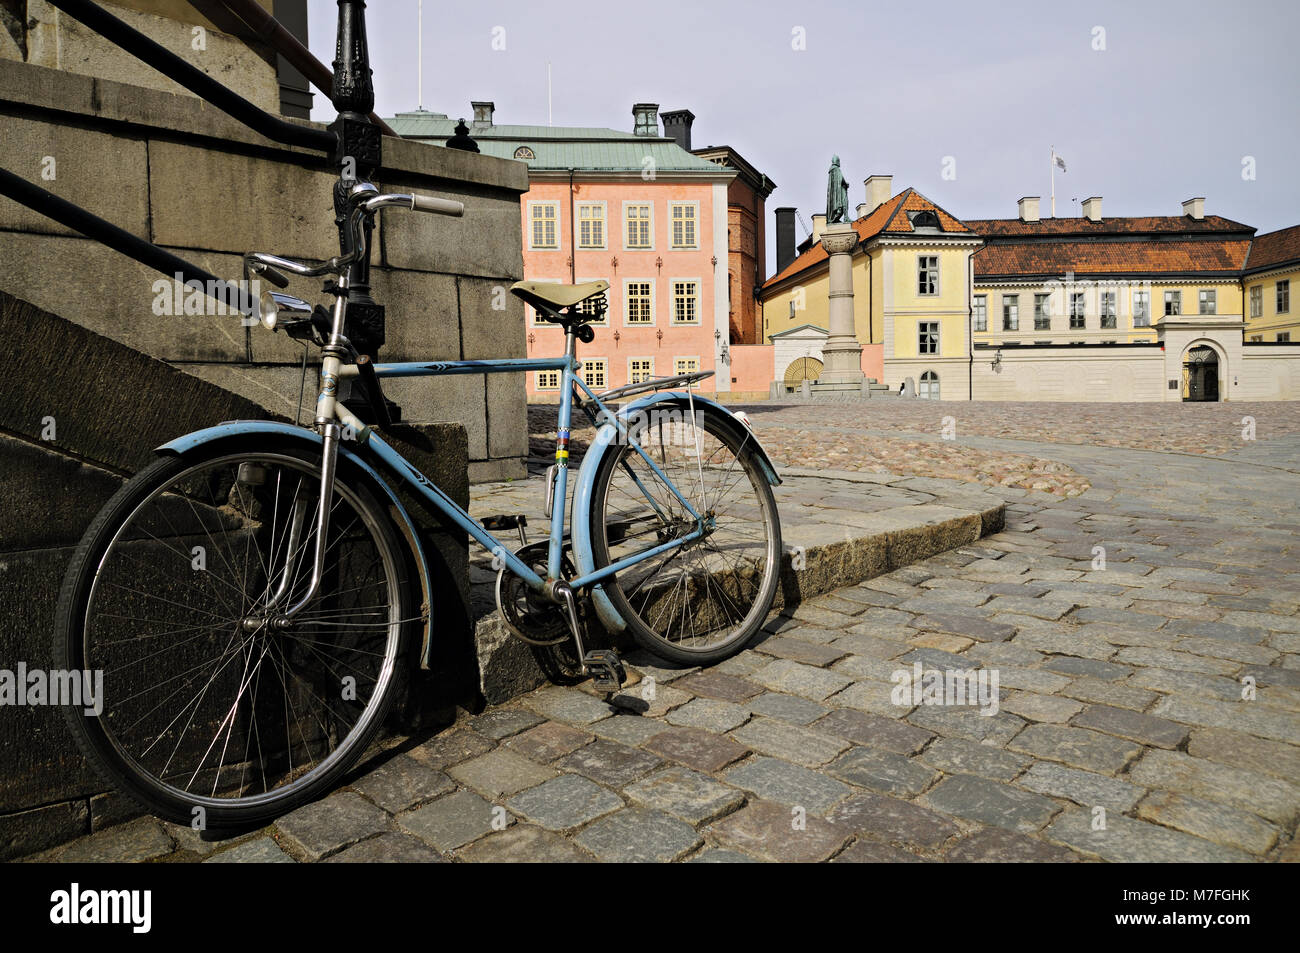 Old blue bicycle parked in Riddarholmen, Gamla Stan, Stockholm, Sweden Stock Photo